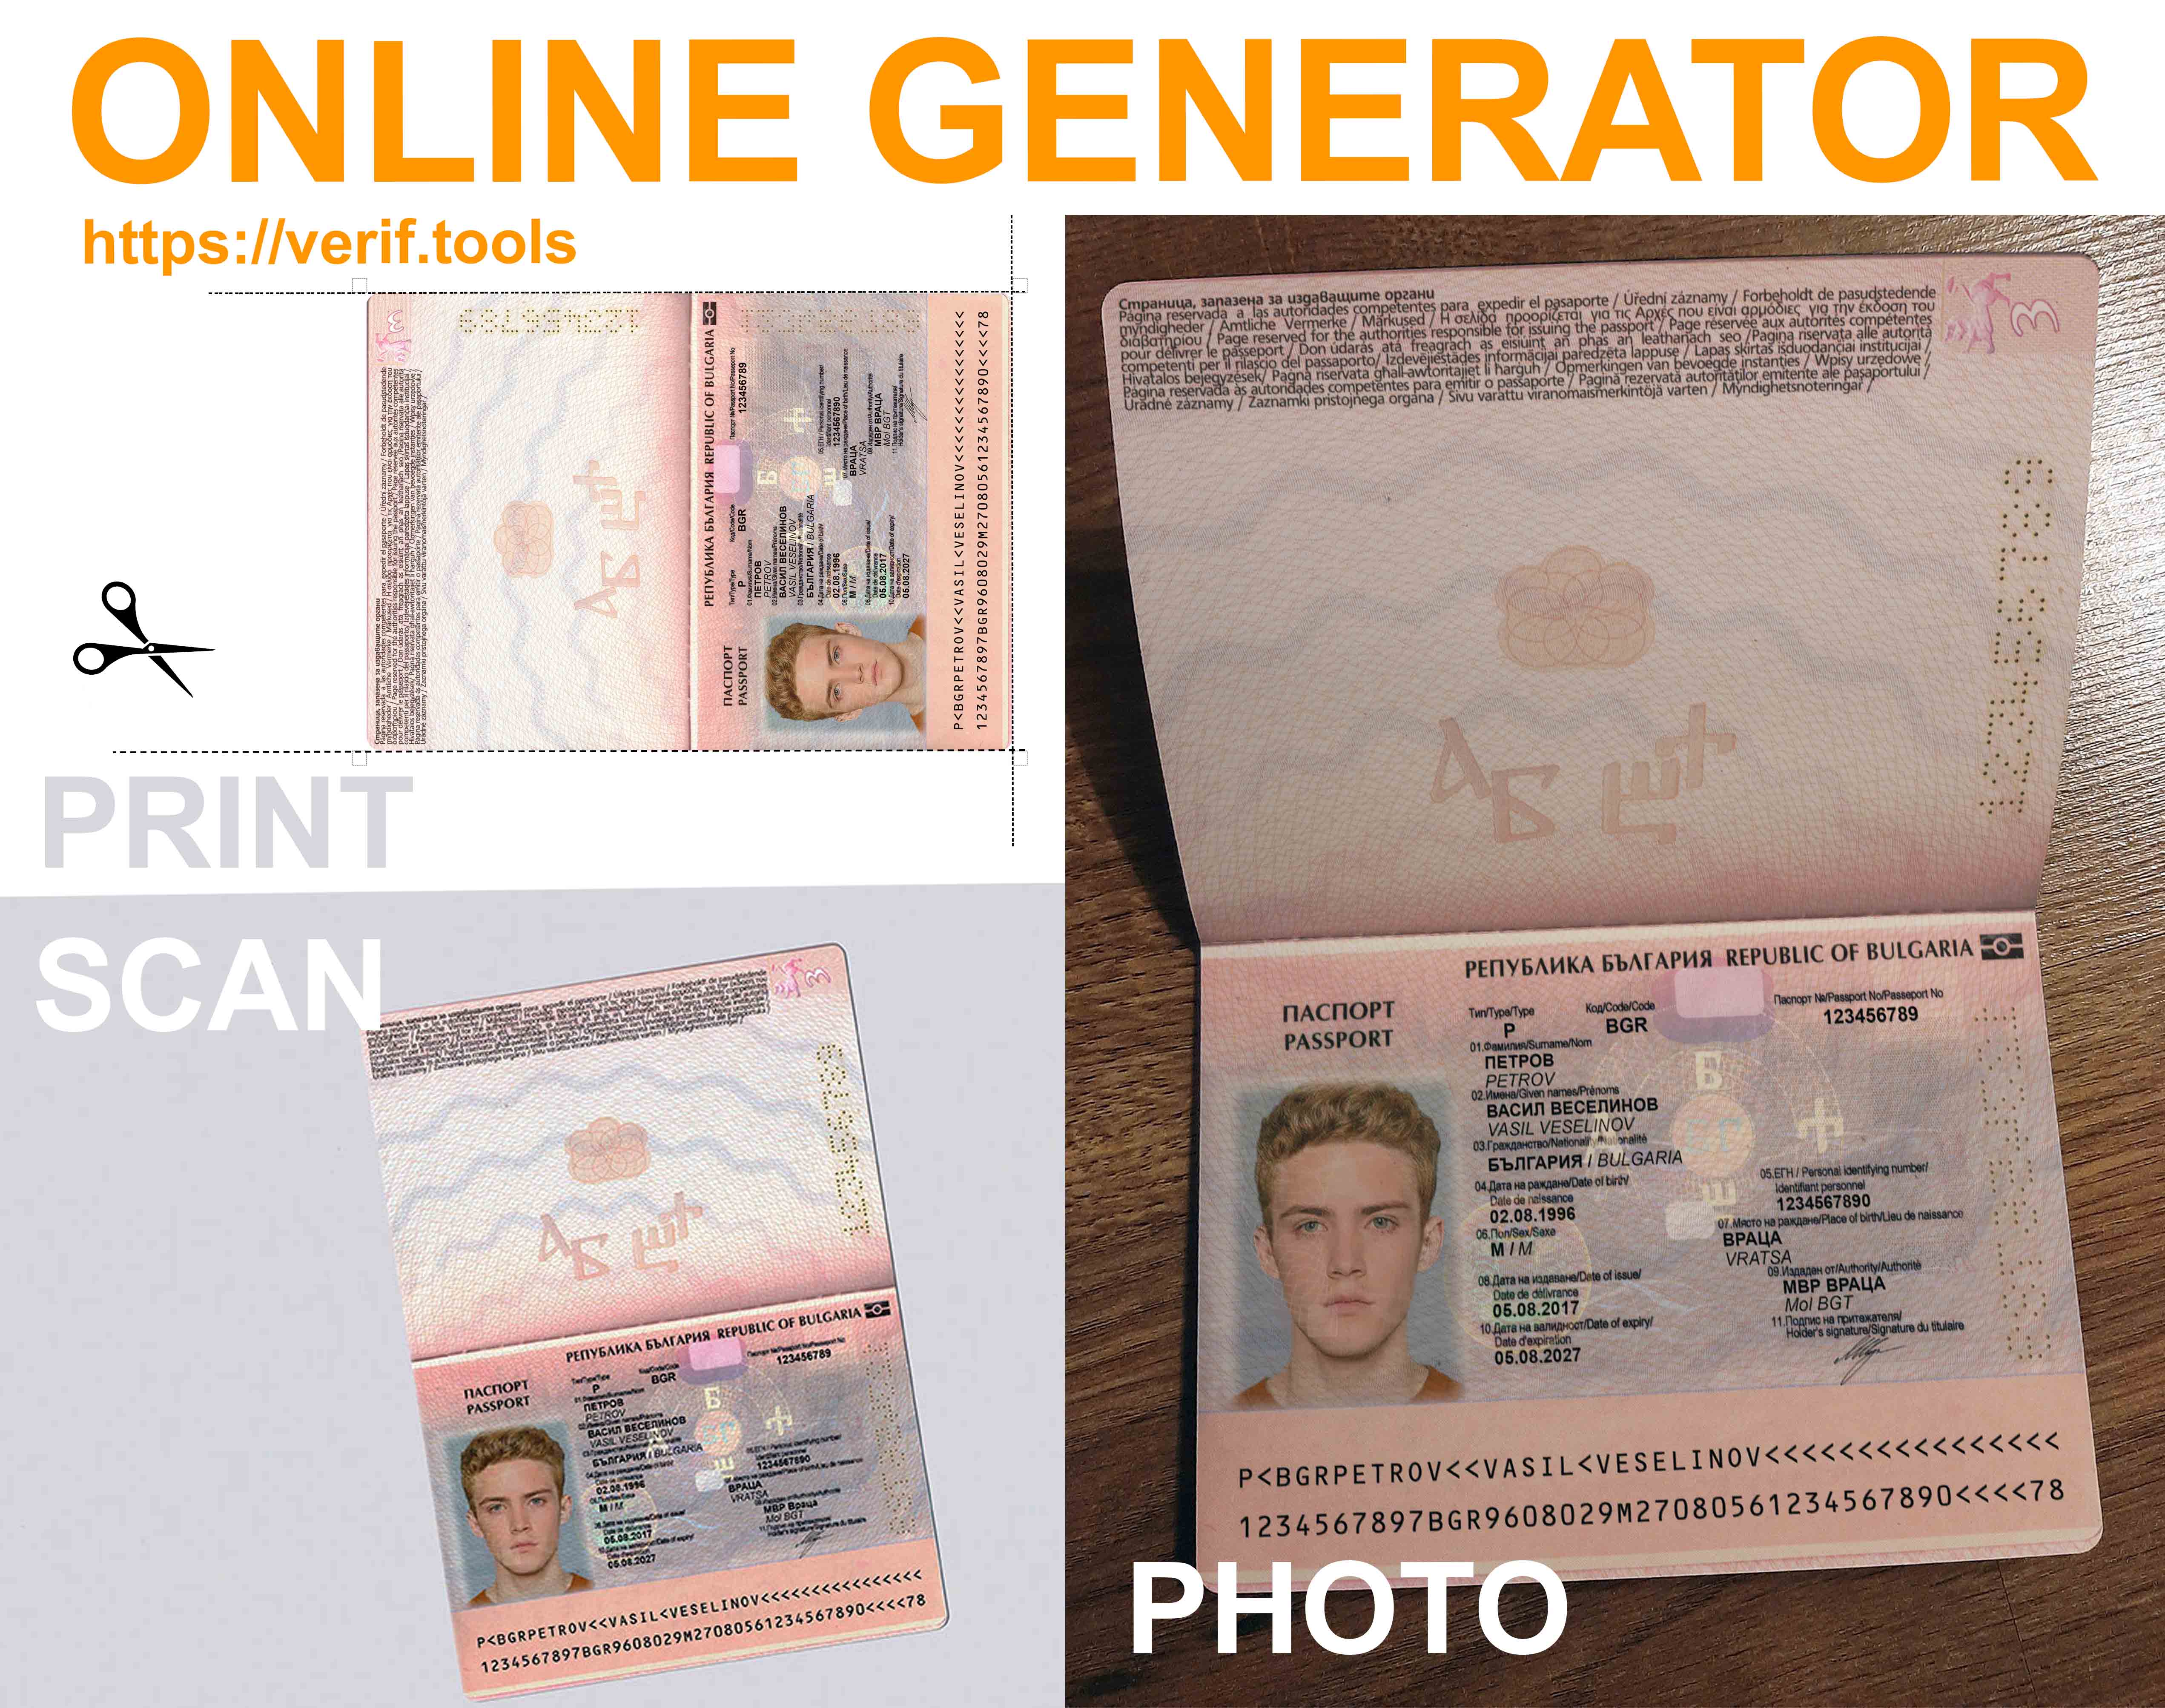 Bulgaria Passport Online Generator